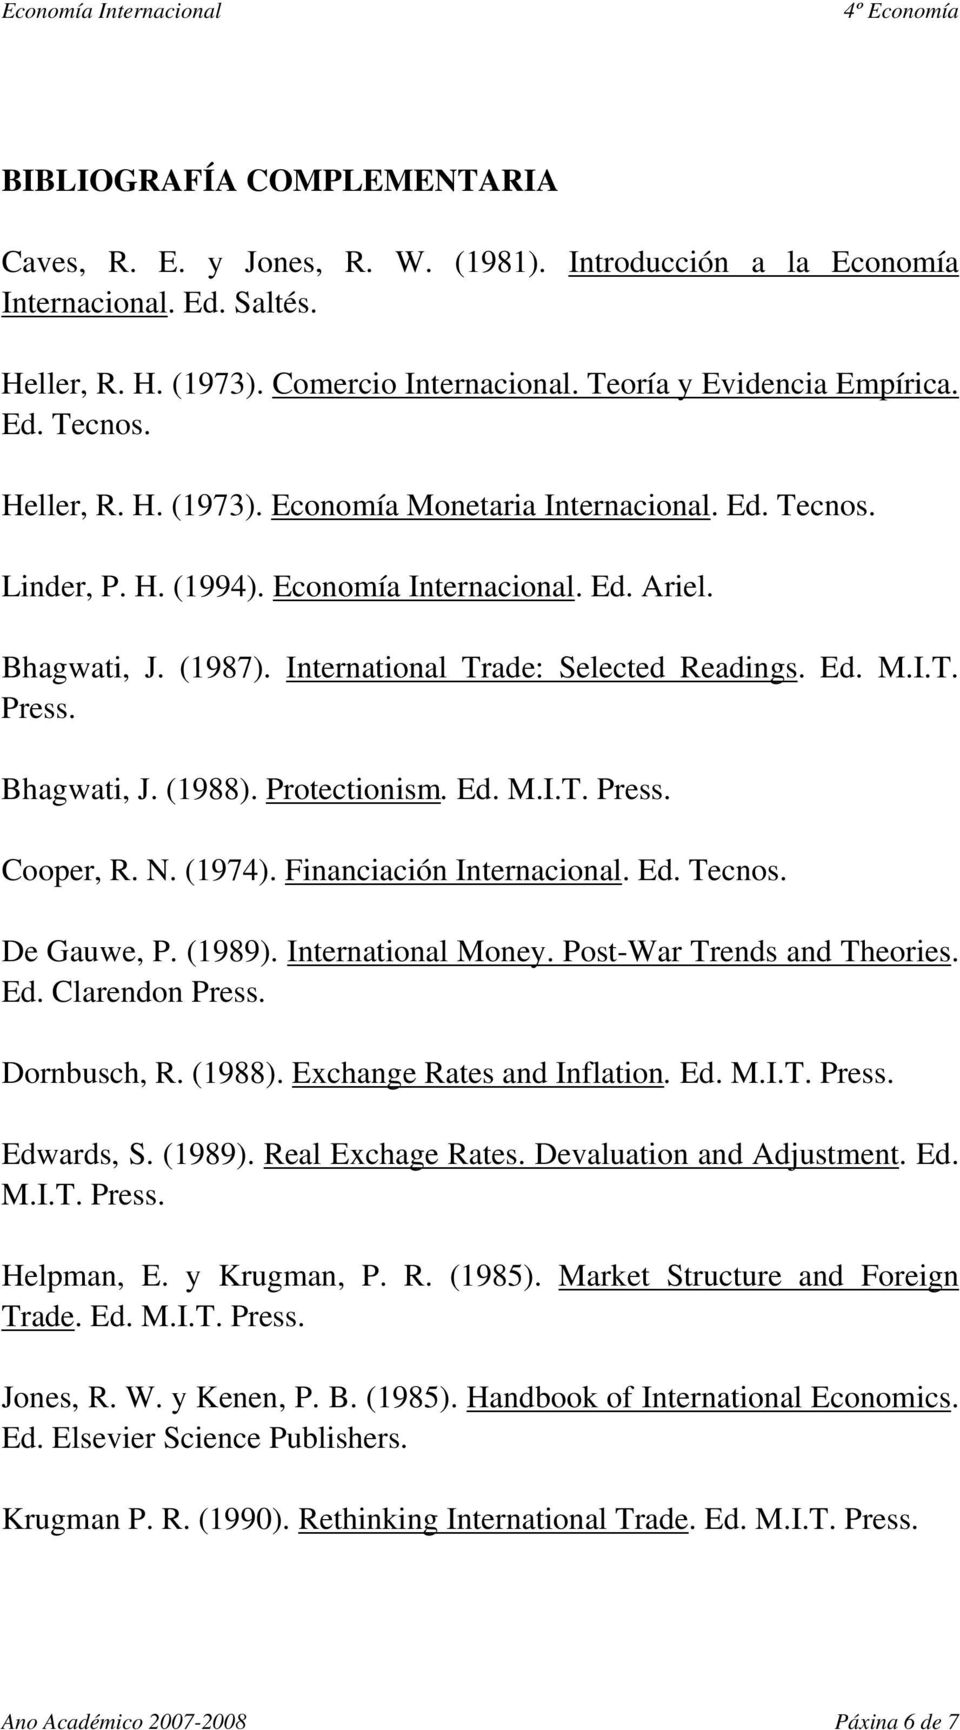 Bhagwati, J. (1988). Protectionism. Ed. M.I.T. Press. Cooper, R. N. (1974). Financiación Internacional. Ed. Tecnos. De Gauwe, P. (1989). International Money. Post-War Trends and Theories. Ed. Clarendon Press.